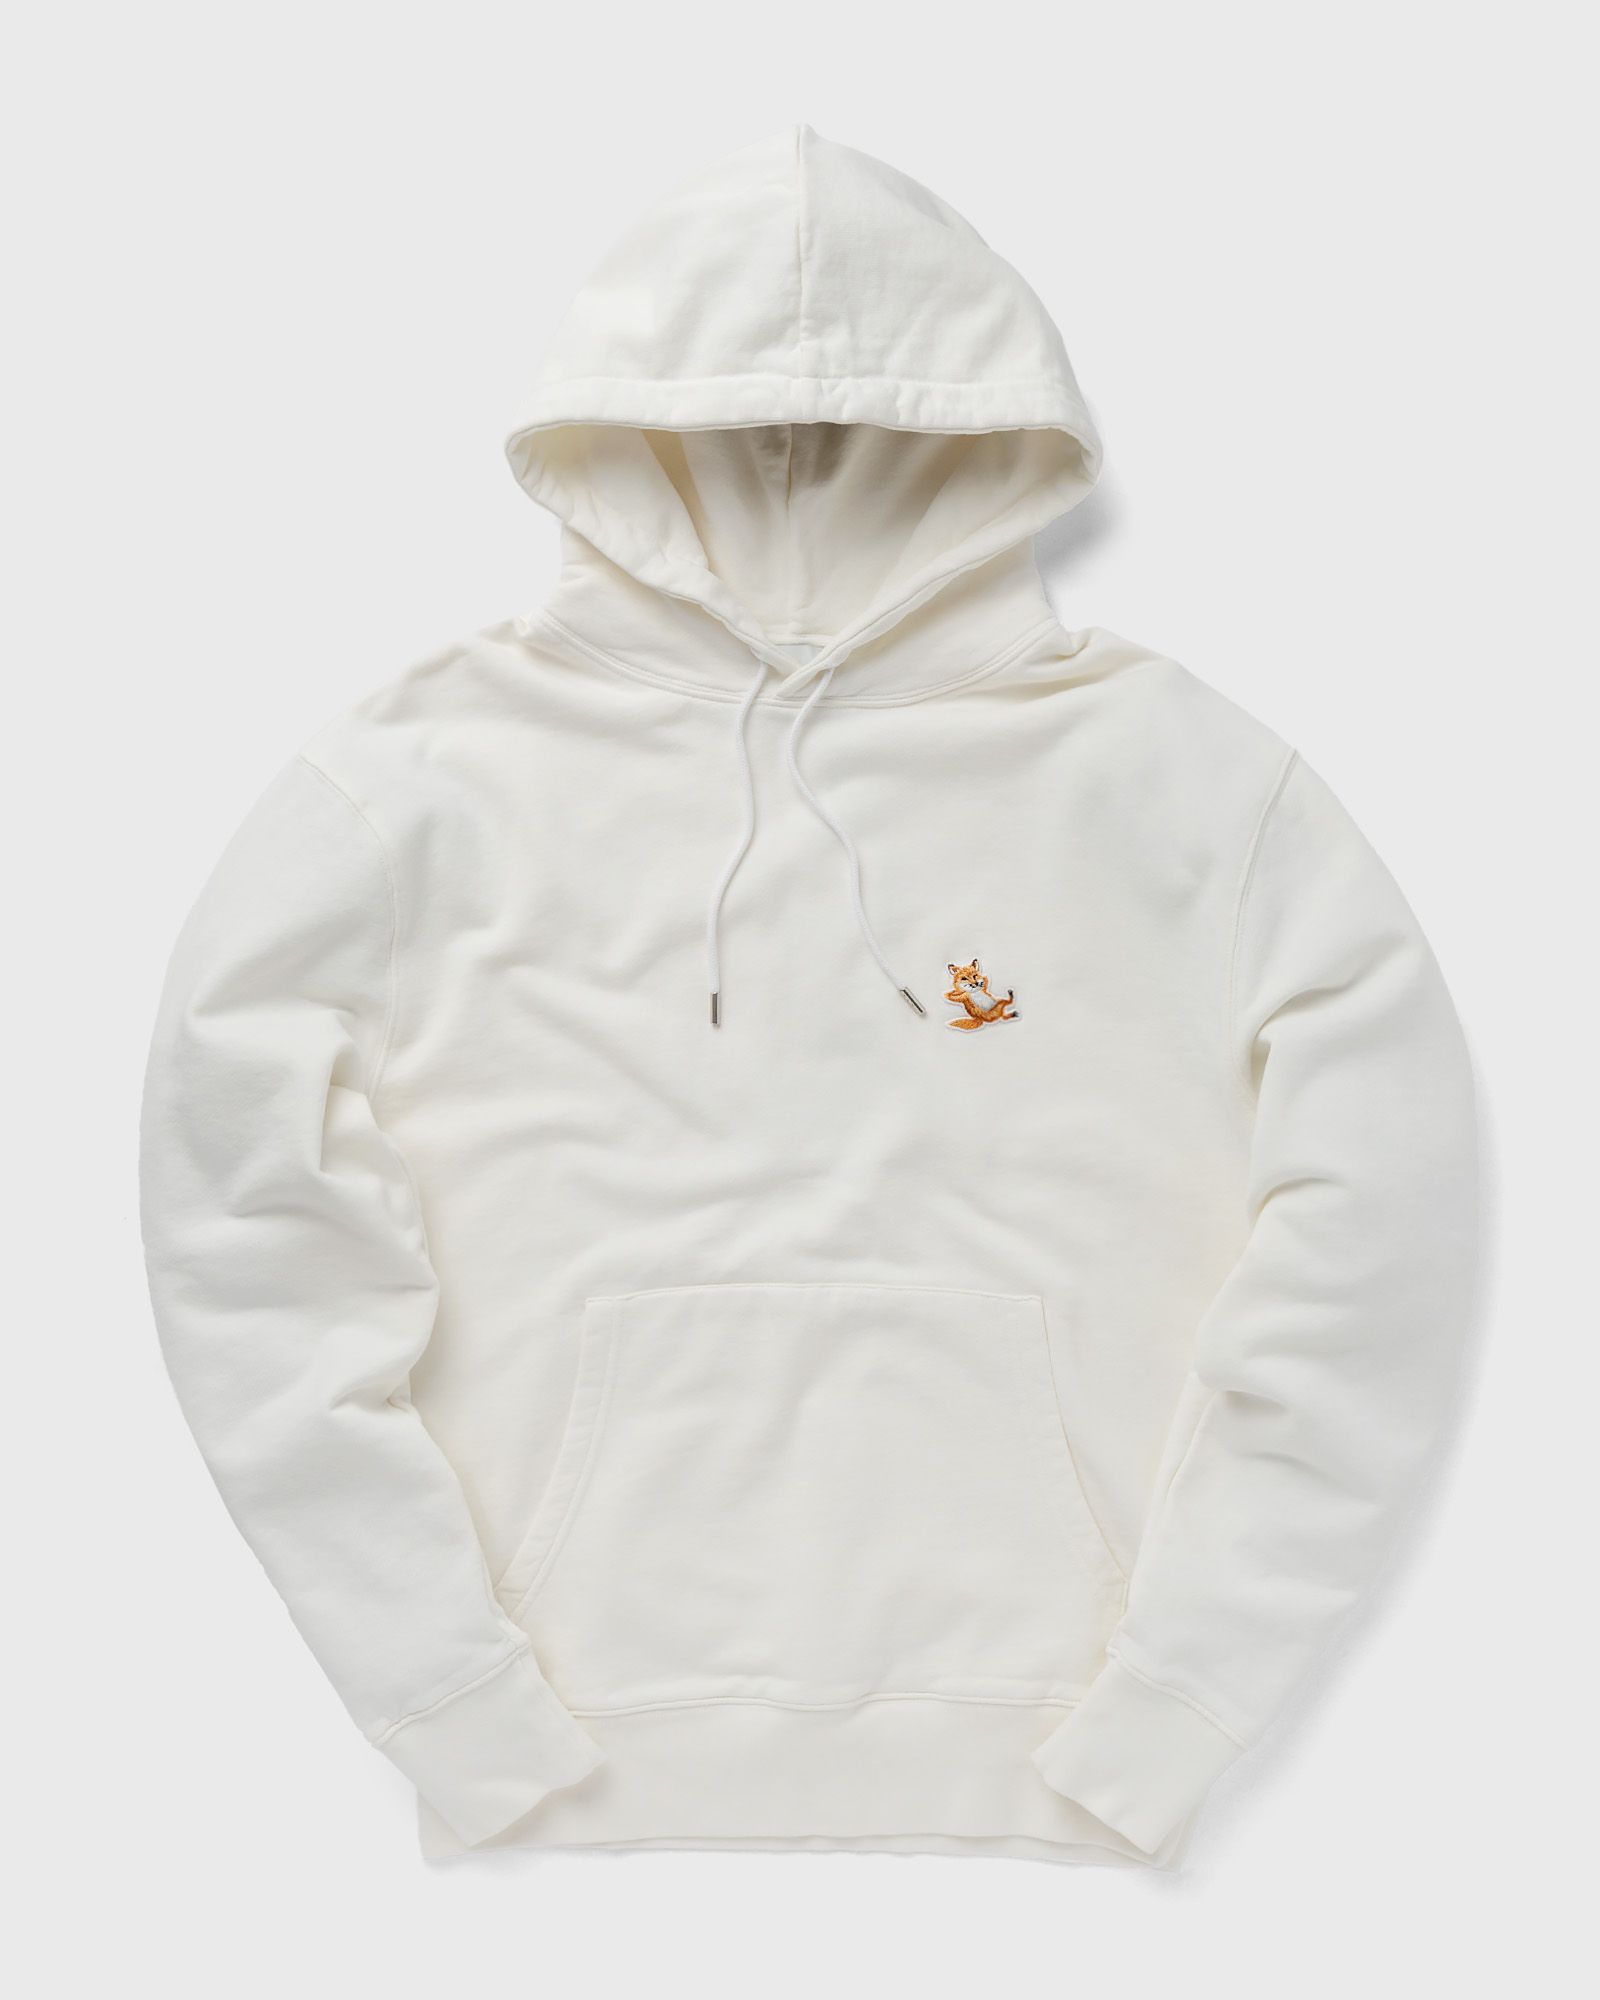 Maison Kitsune - chillax fox patch classic hoodie men hoodies white in größe:s